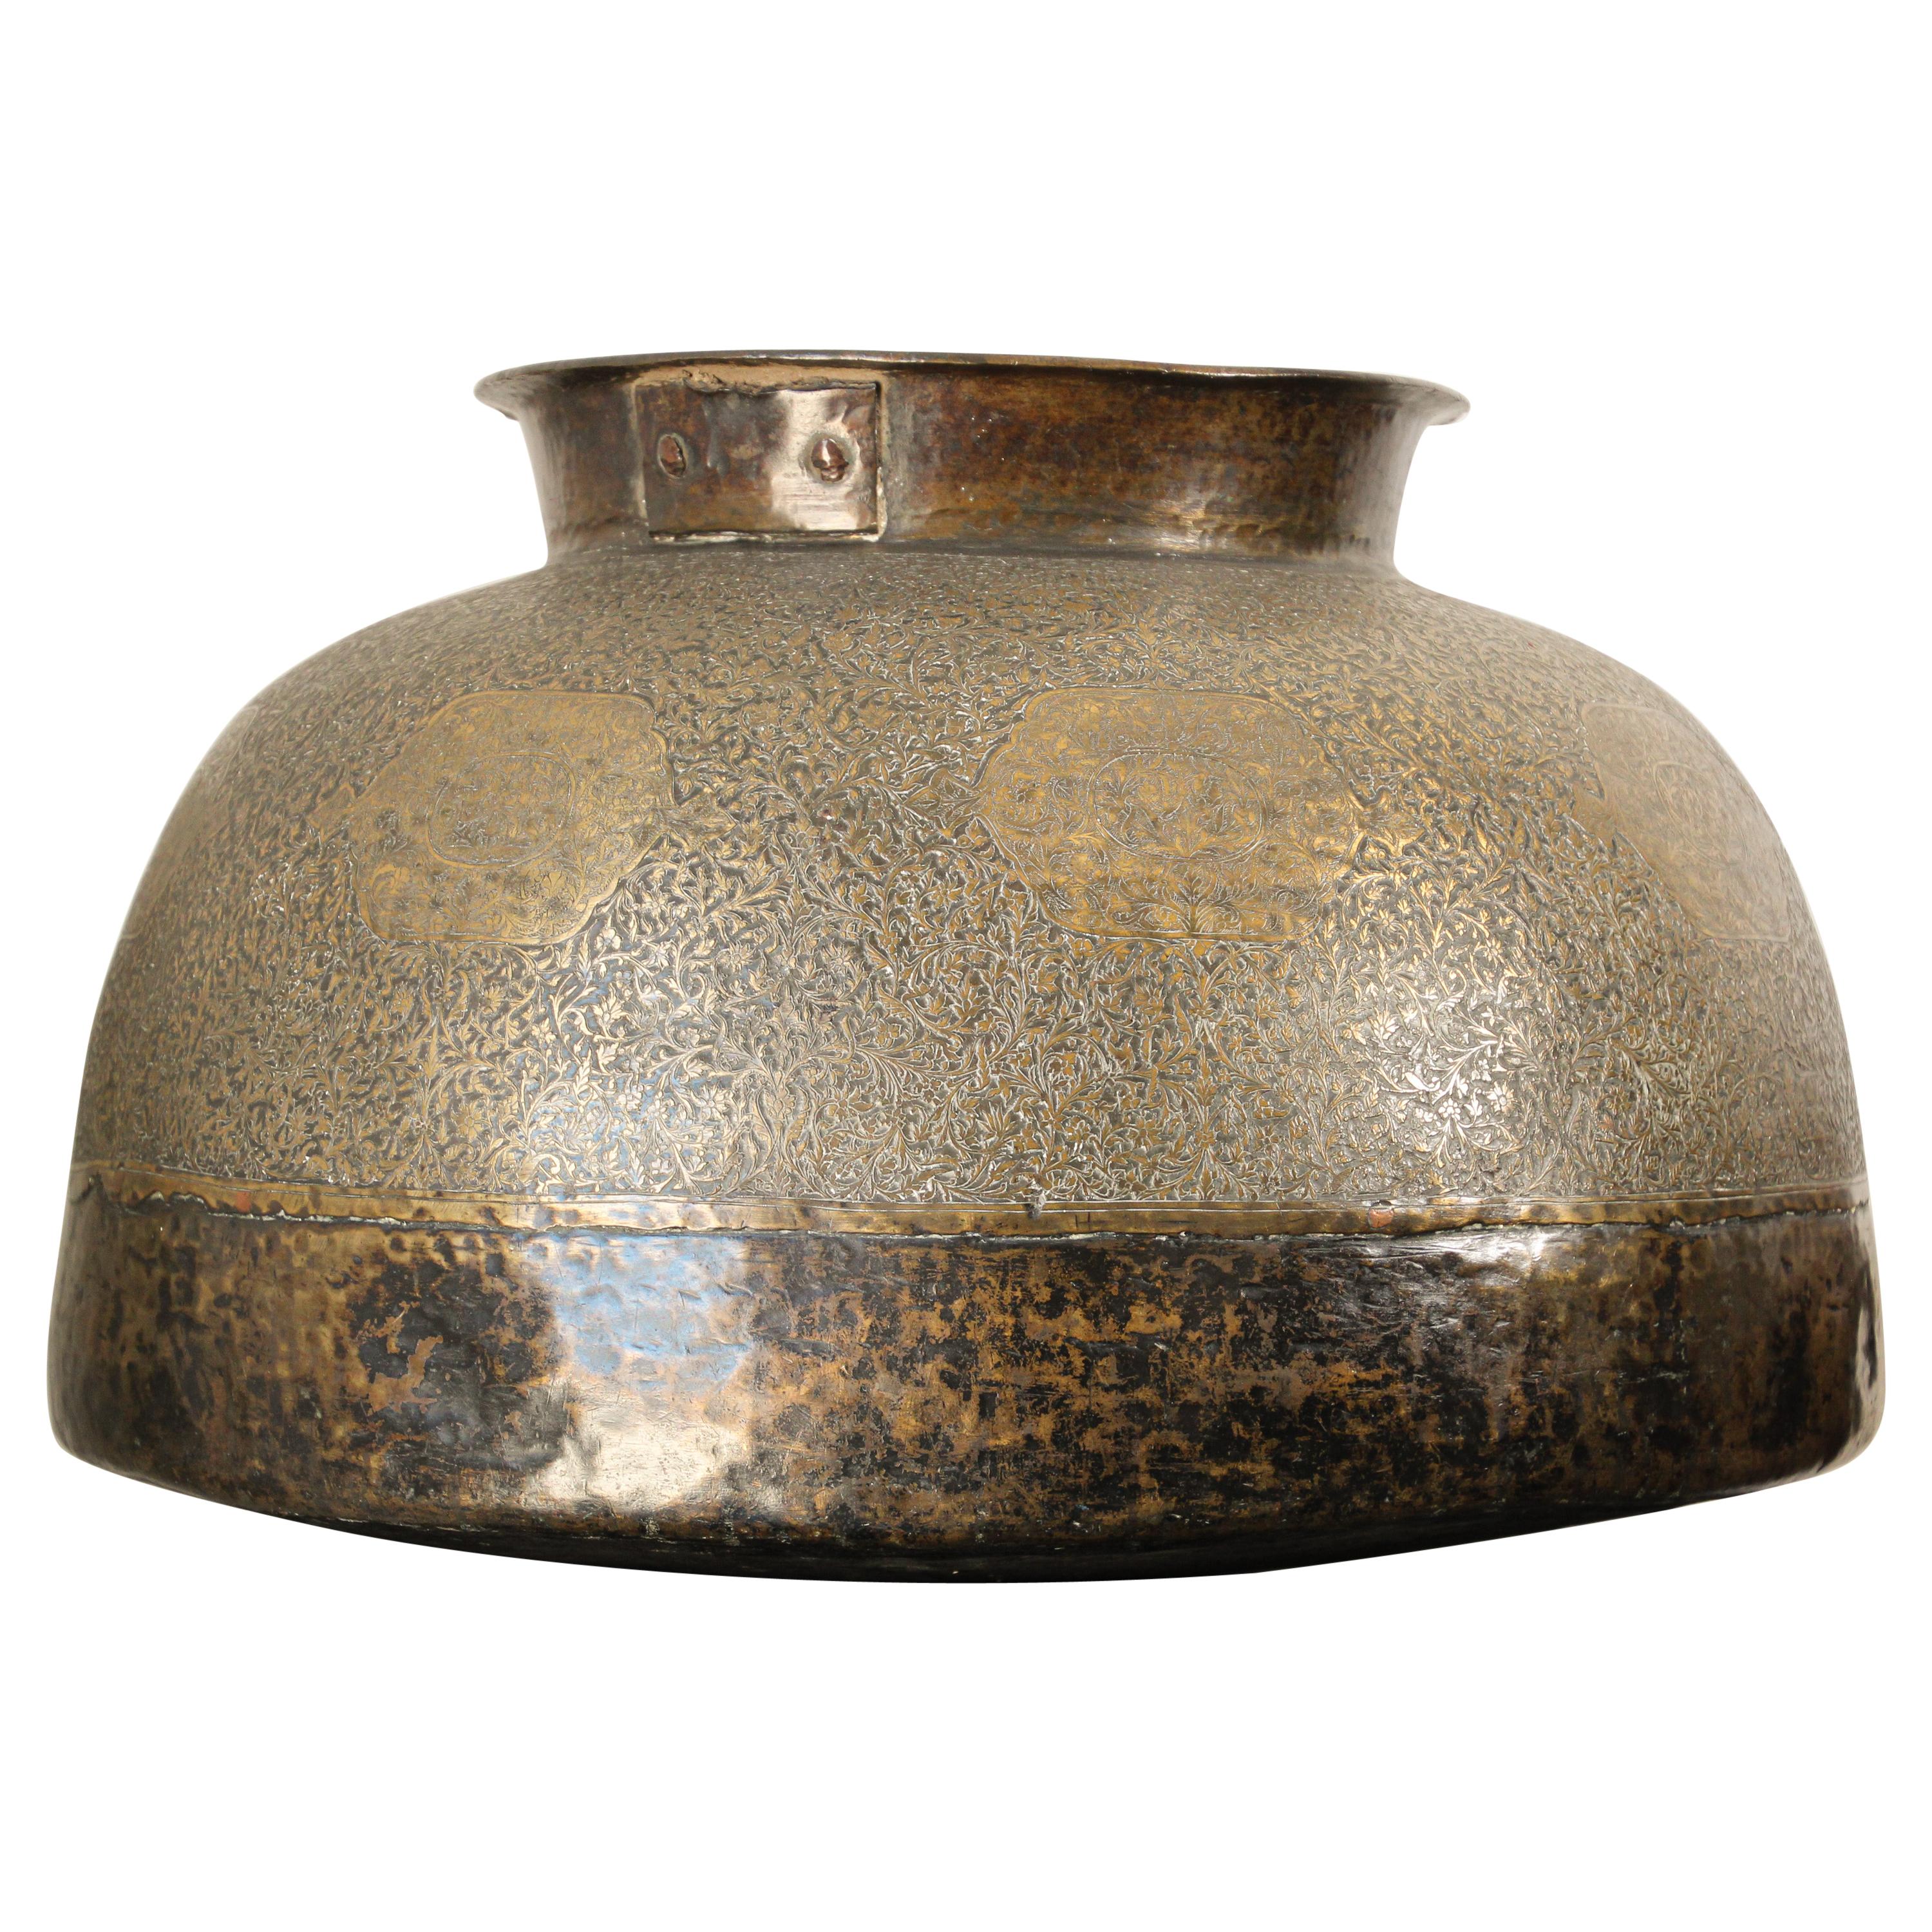 Grand vase moghol ancien en cuivre indo-persan incrusté islamique